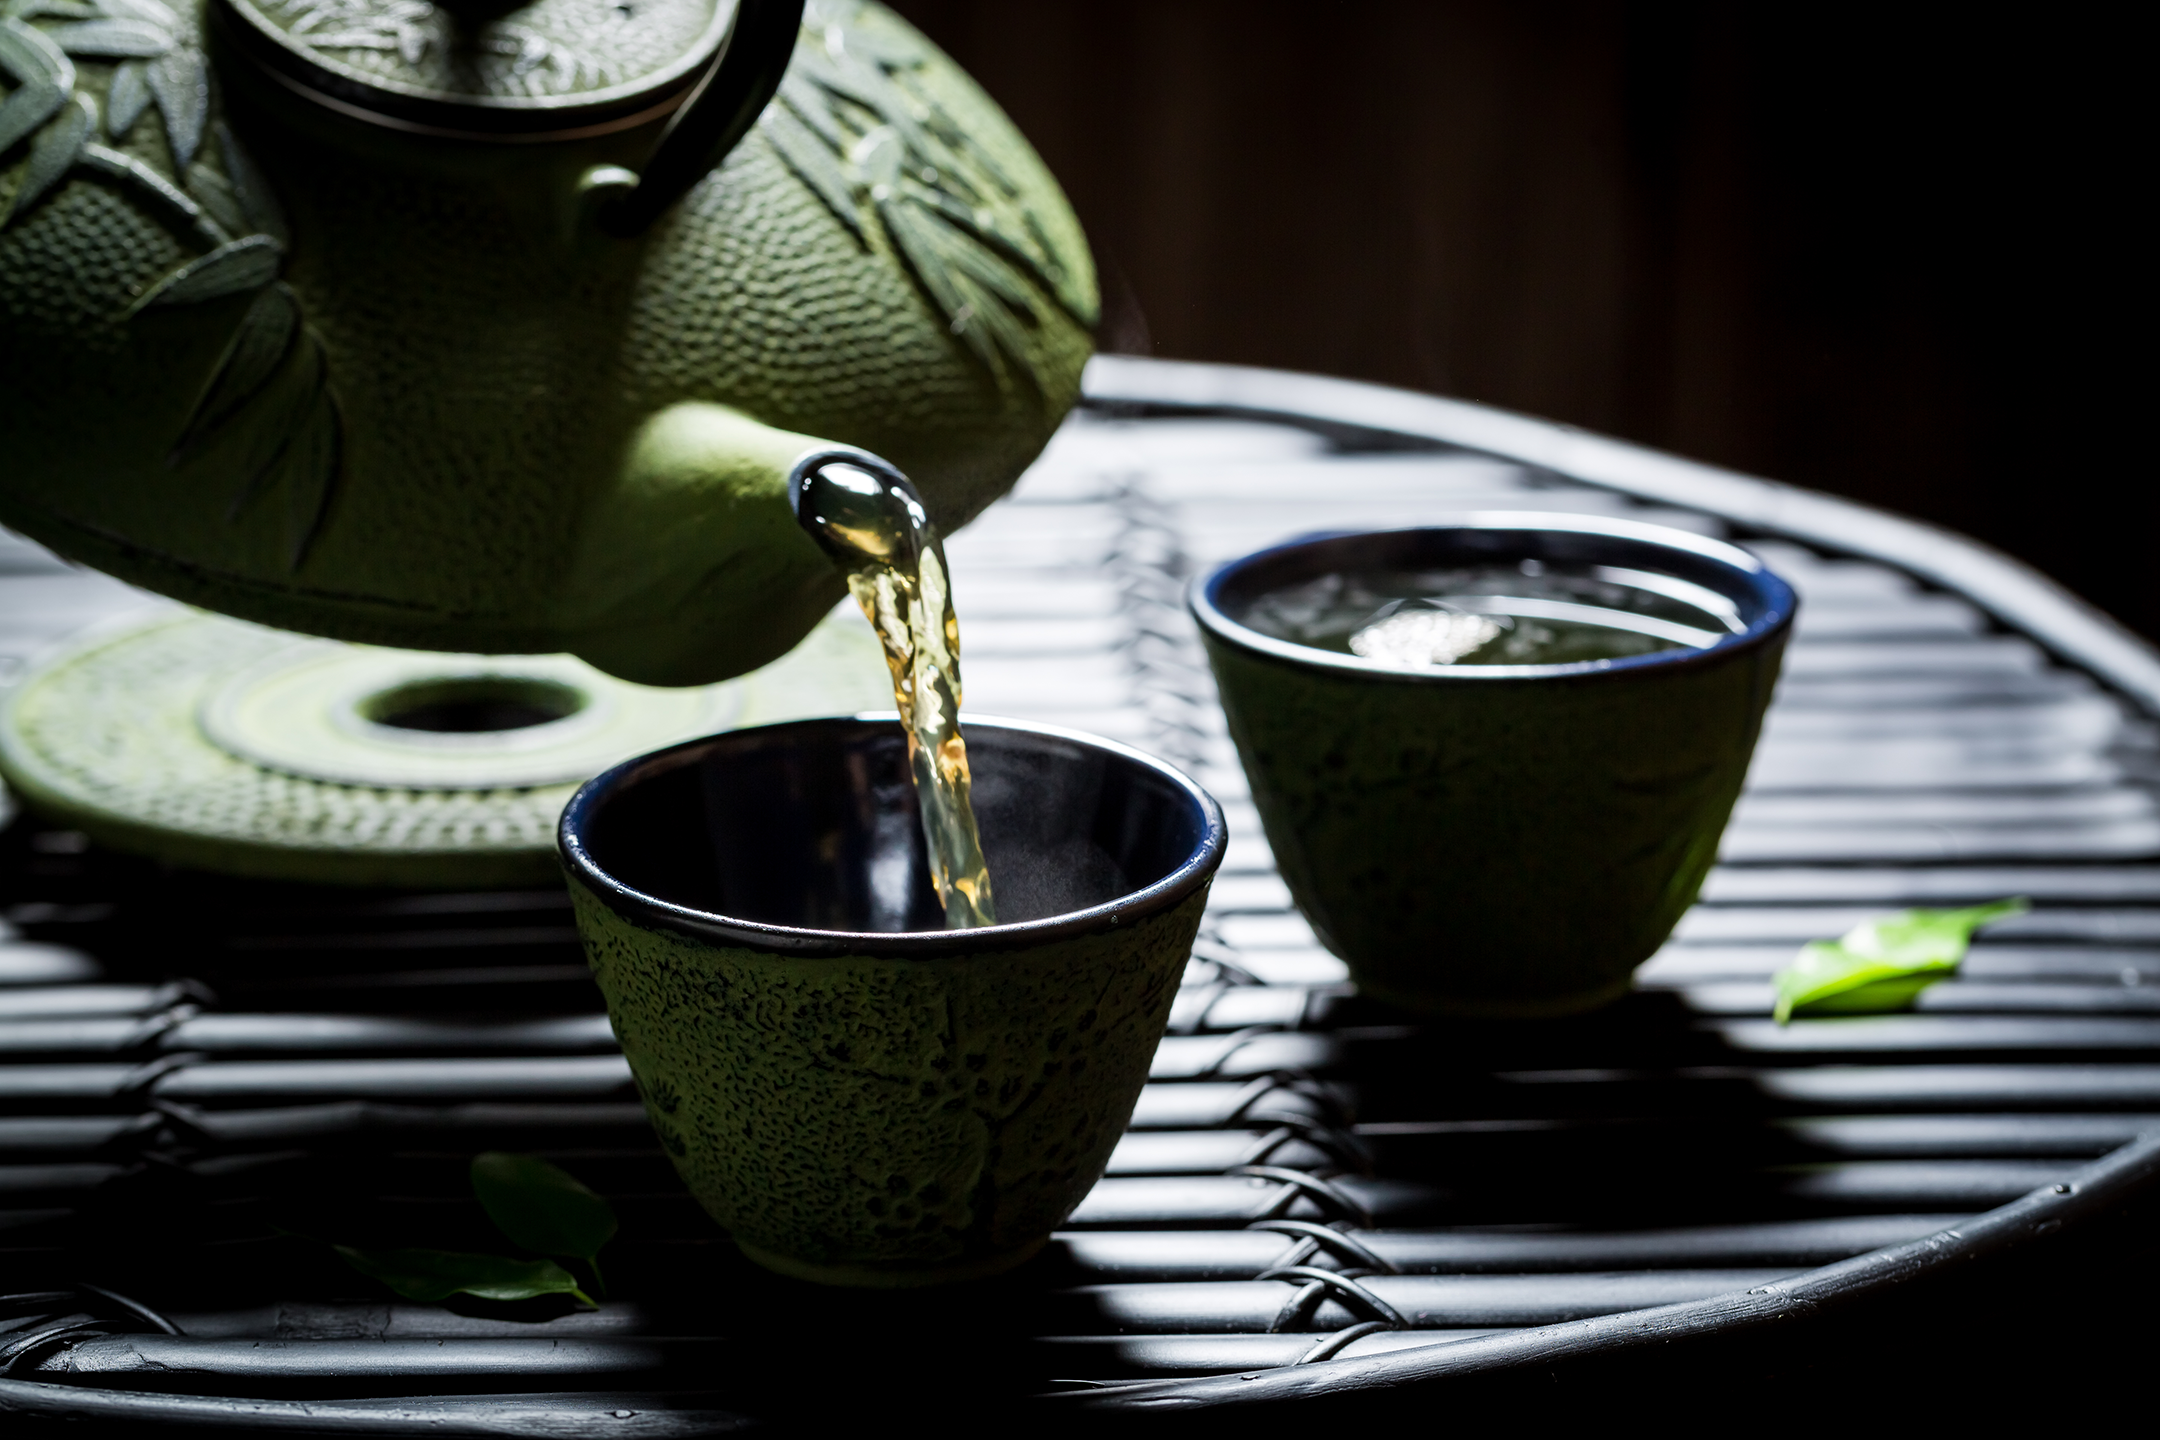 Green tea can help improve overall health